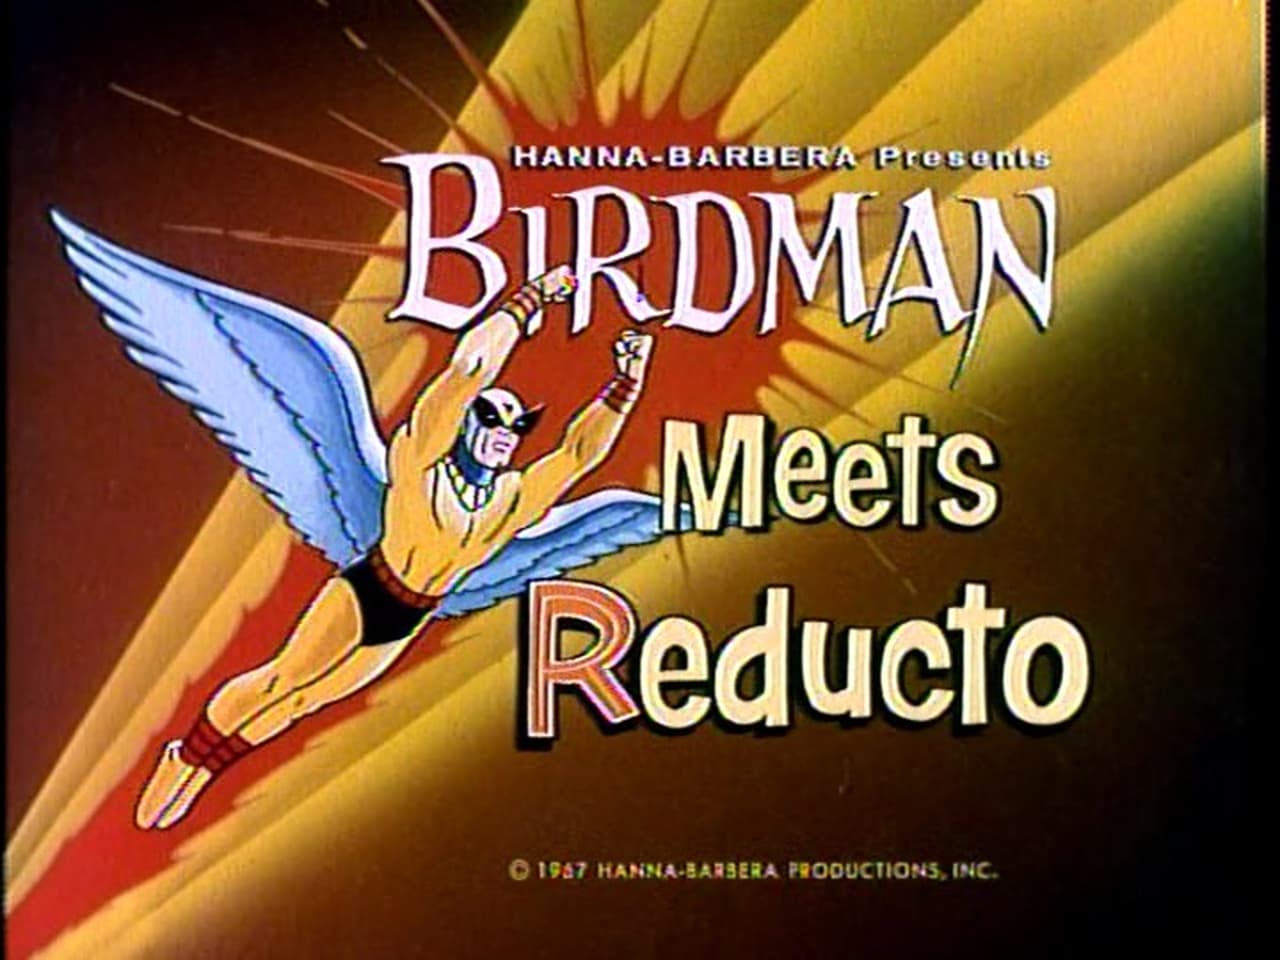 Birdman Meets Reducto